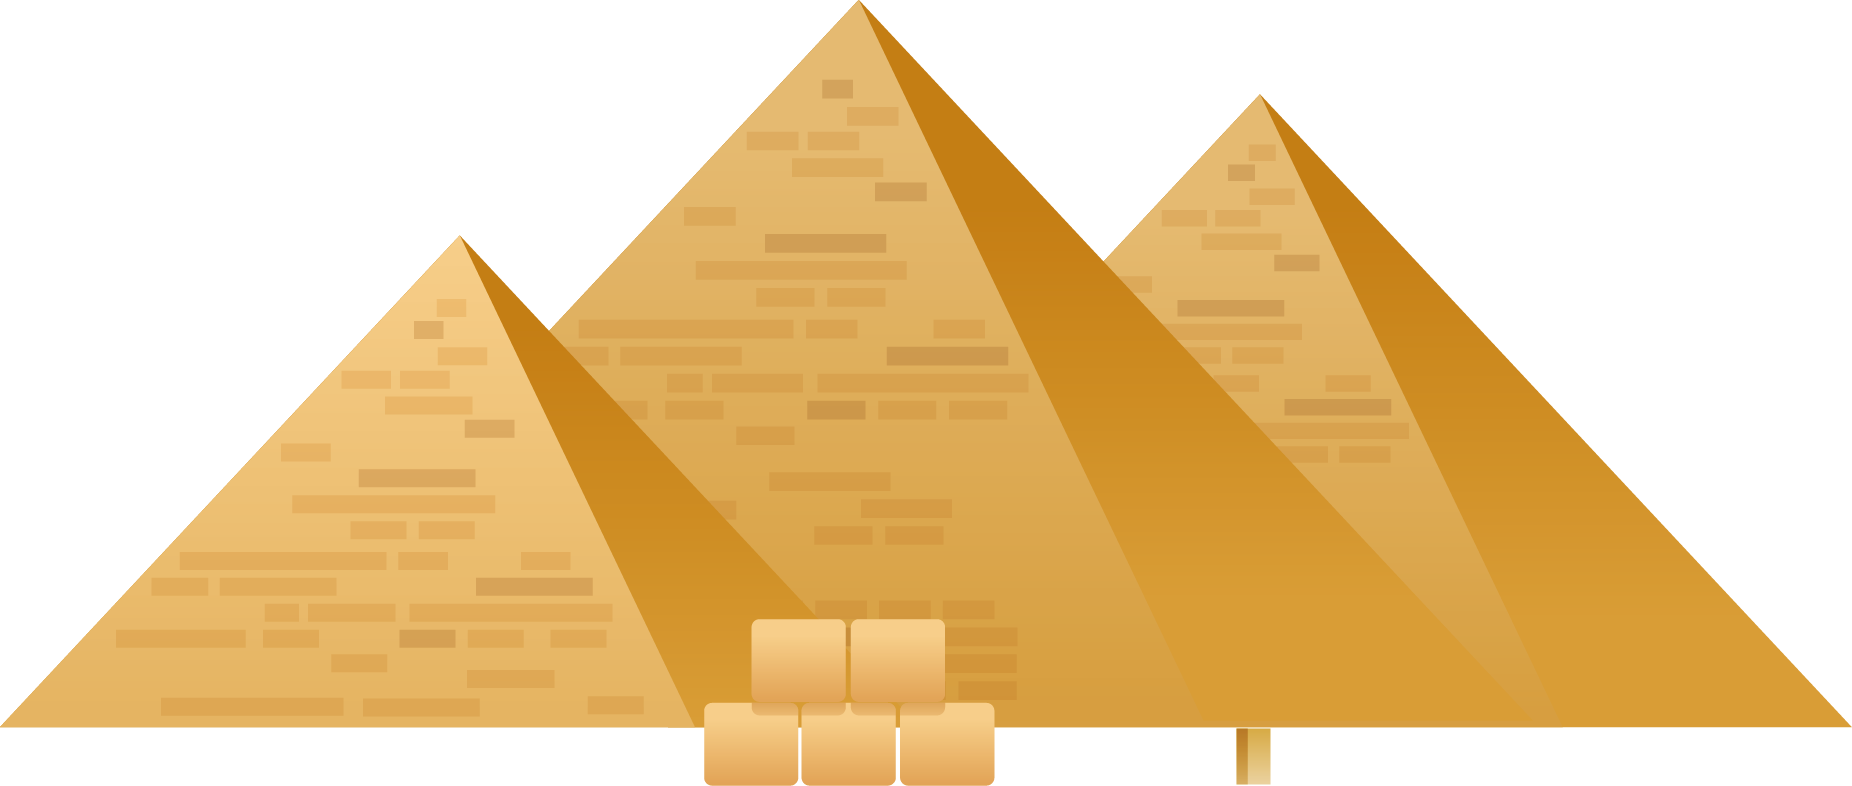 Pyramid Transparent Images